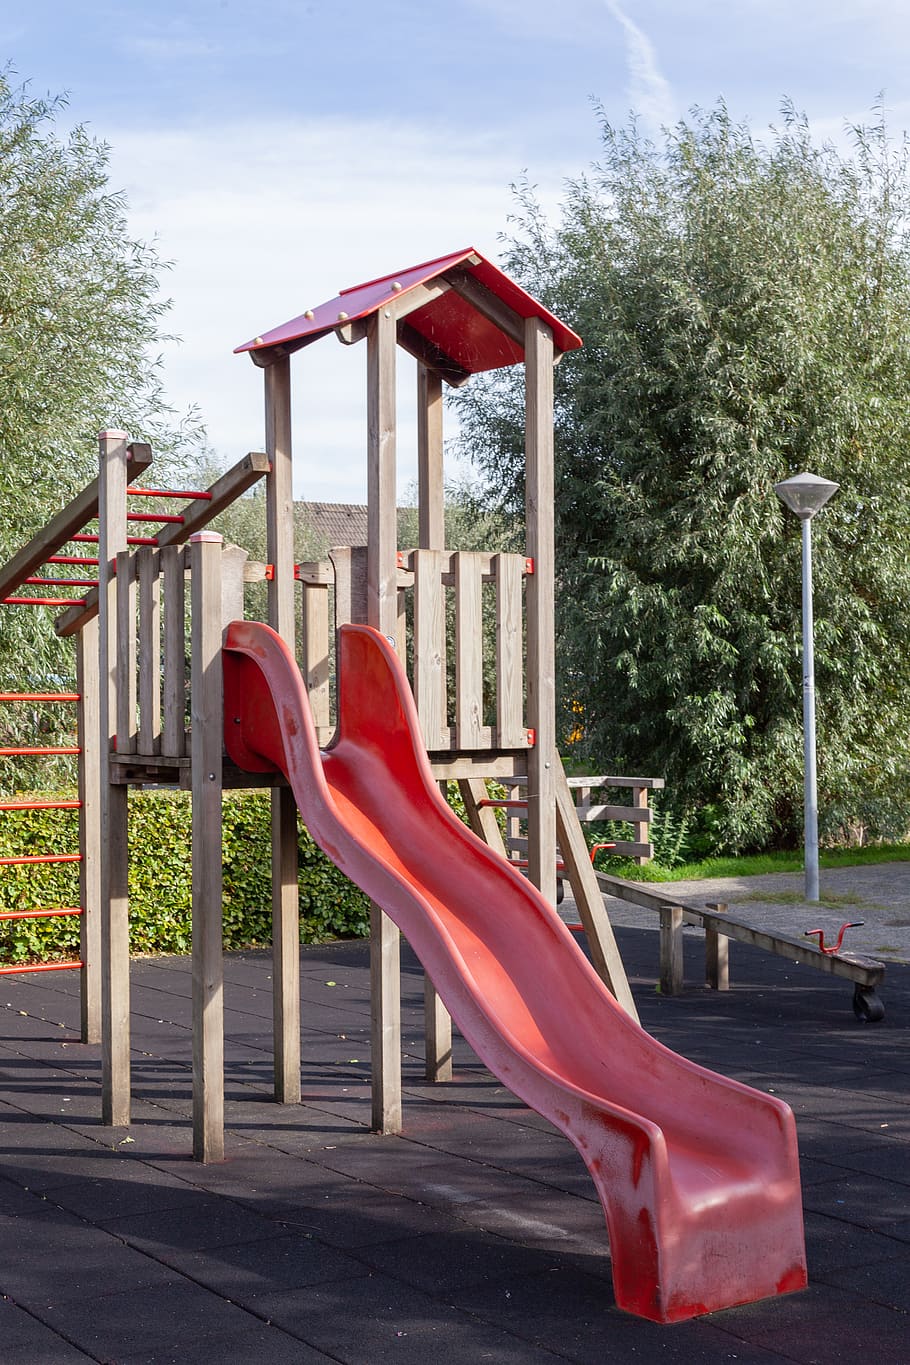 netherlands, zwaag, playground, red, tree, outdoor play equipment